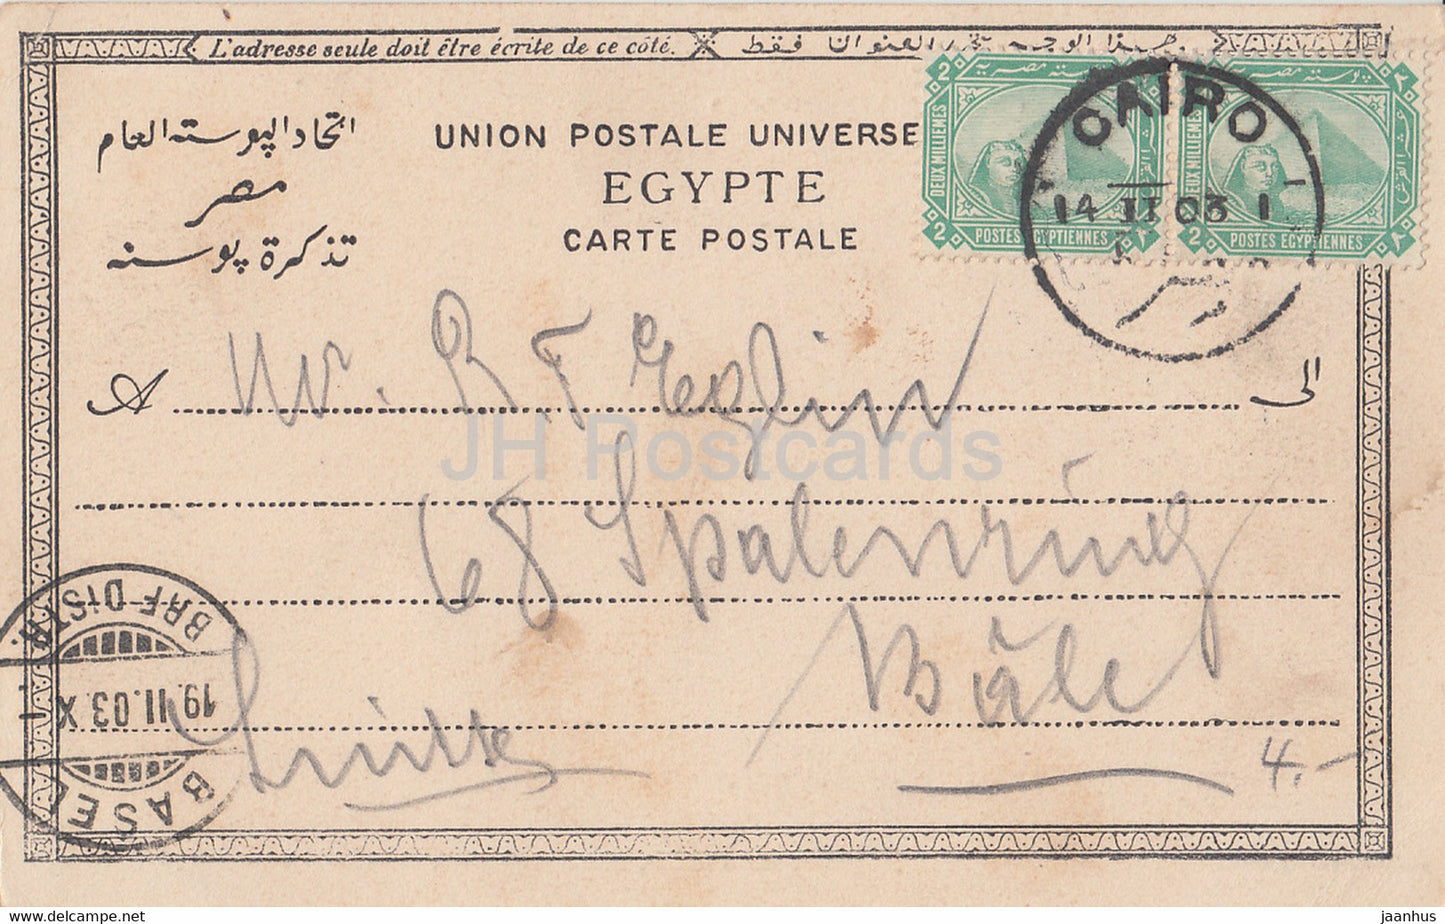 Philae - ancient world - 251 - old postcard - 1903 - Egypt - used